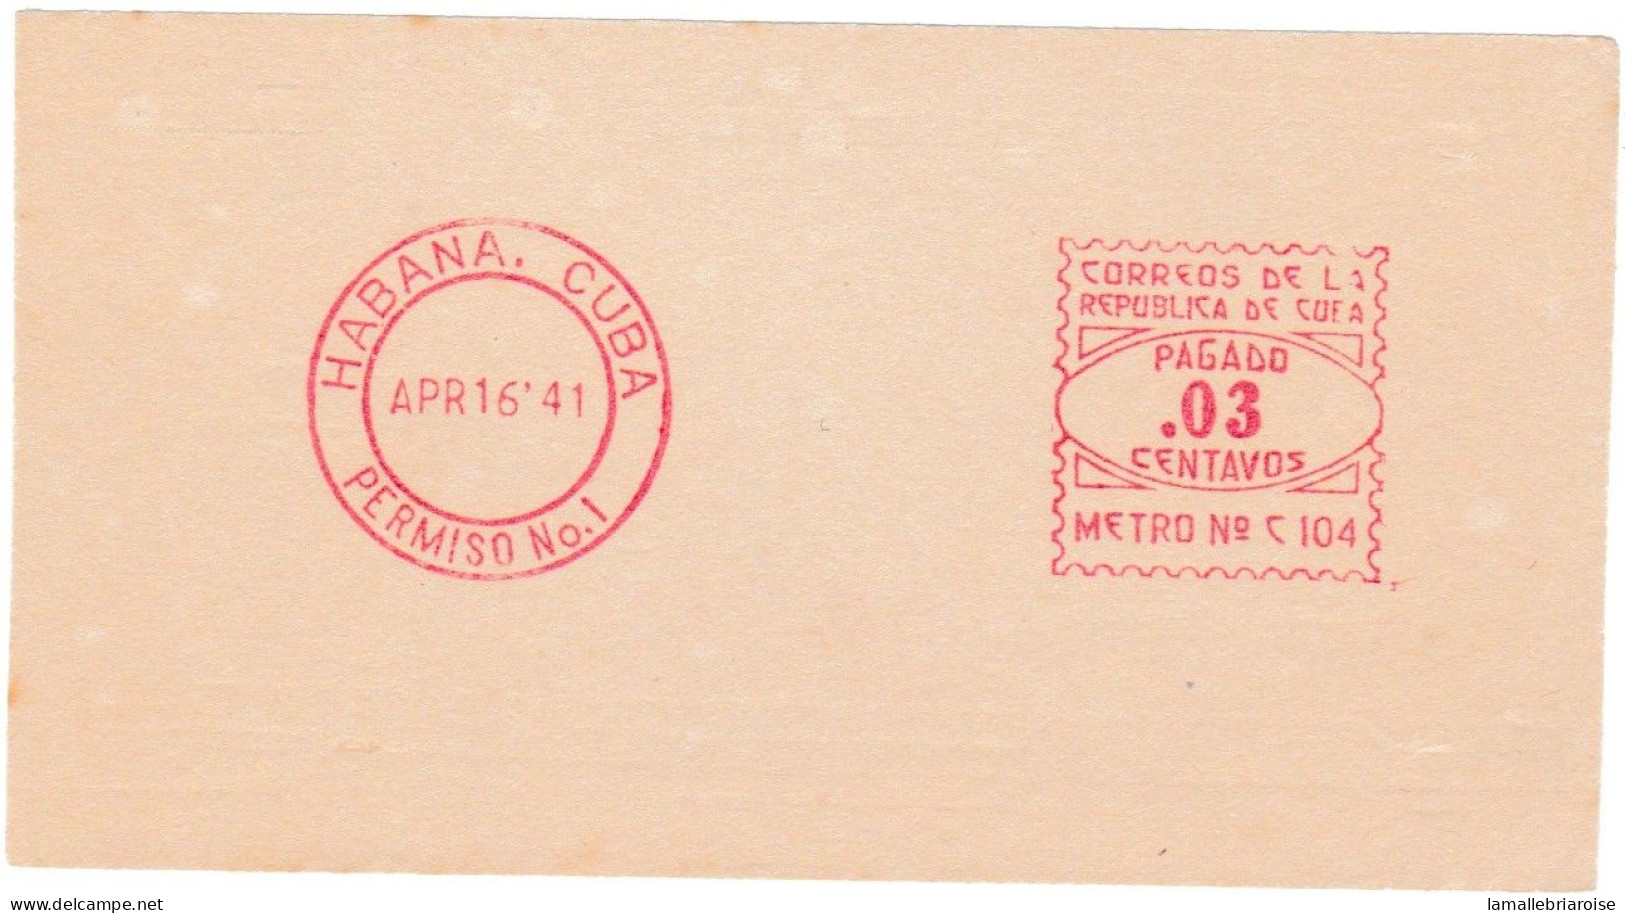 Cuba, Habana, Essai De Machine à Affranchir, 16 Avril 1941 - Imperforates, Proofs & Errors